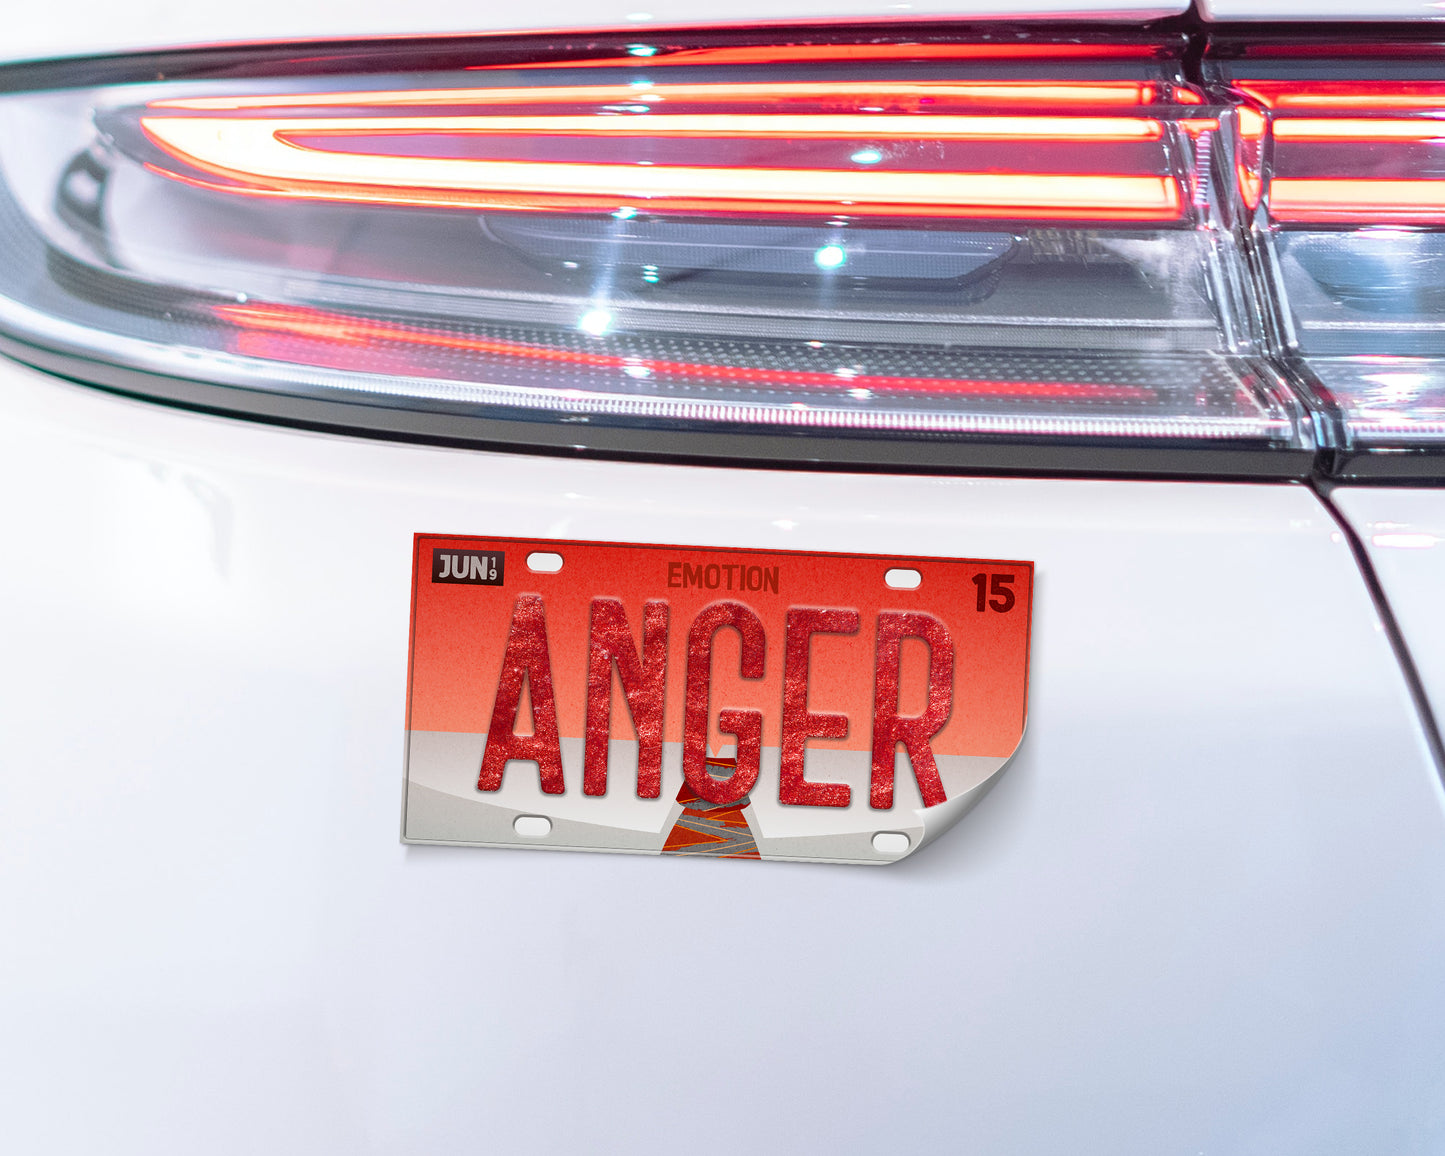 Anger emotion bumper sticker